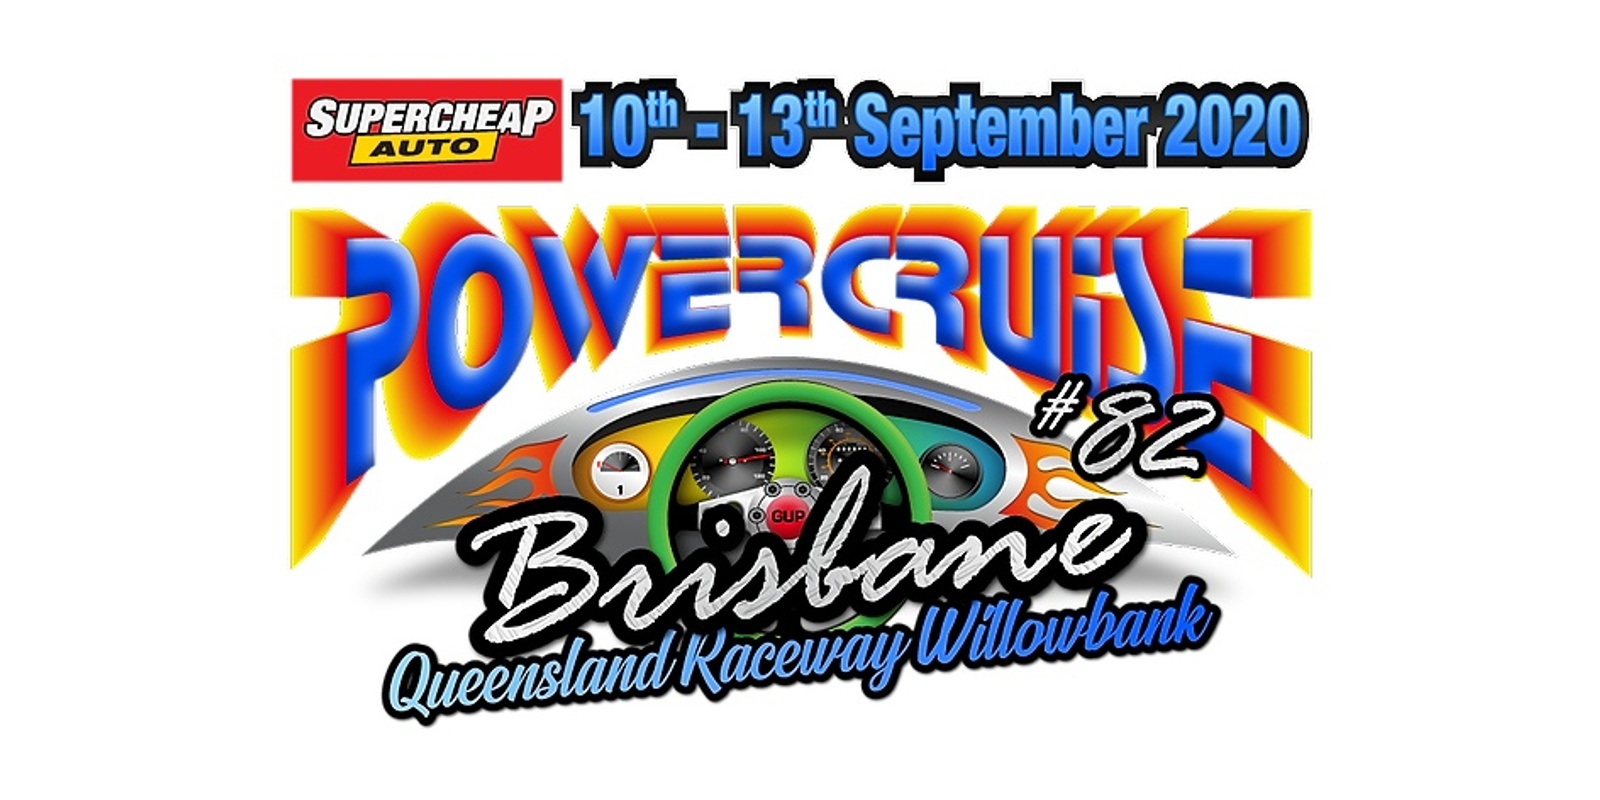 Supercheap Auto POWERCRUISE #82 Queensland Raceway 10th - 13th September 2020